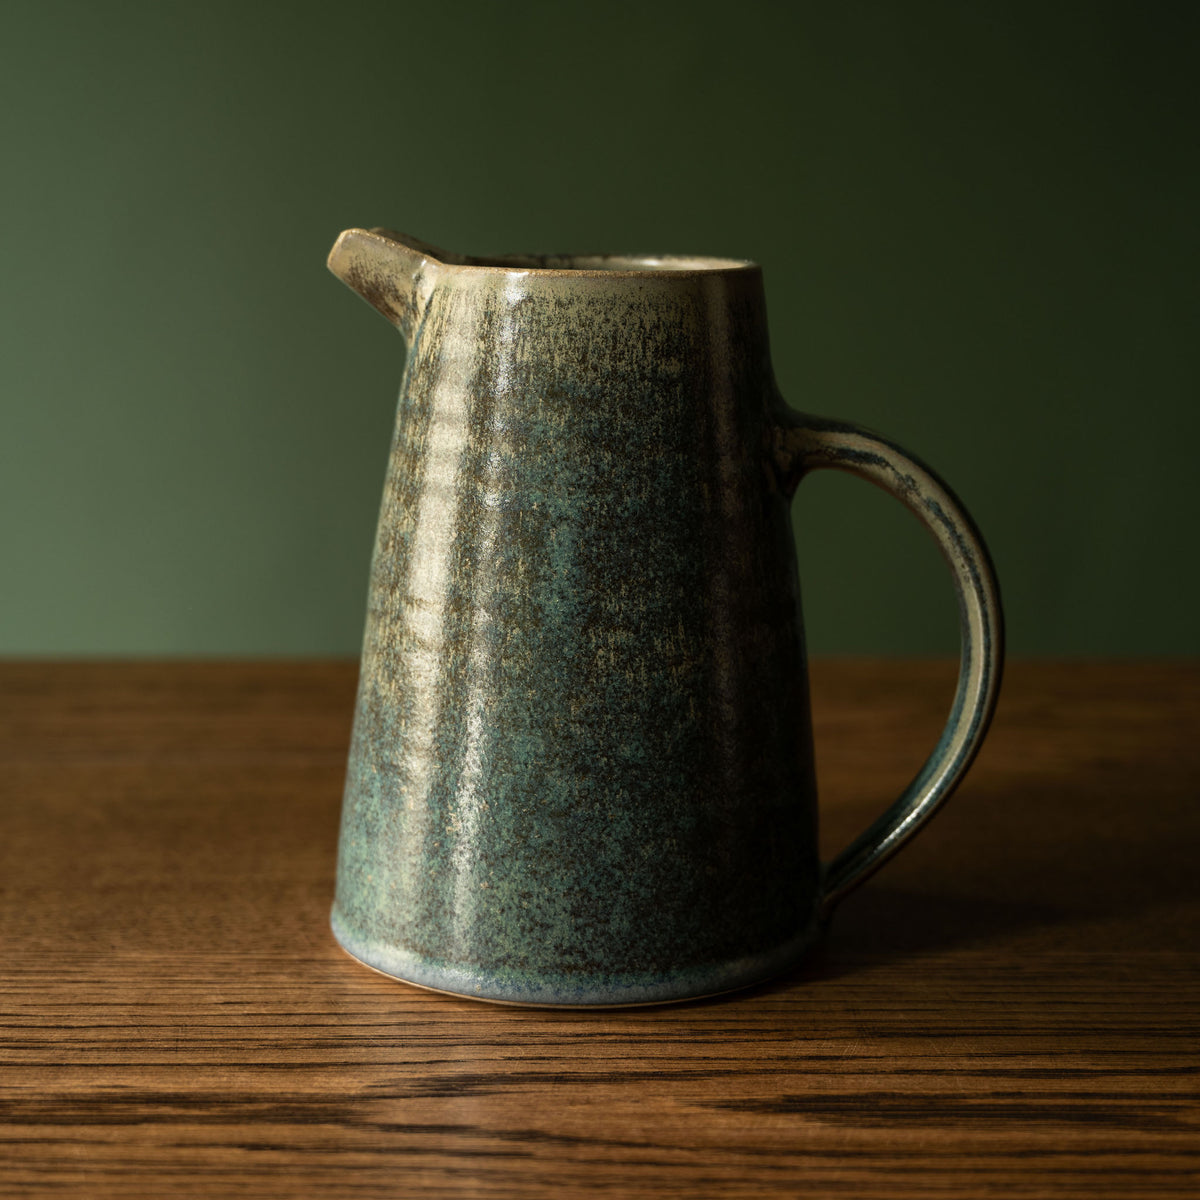 Pottery West Stoneware Jug in Nori glaze